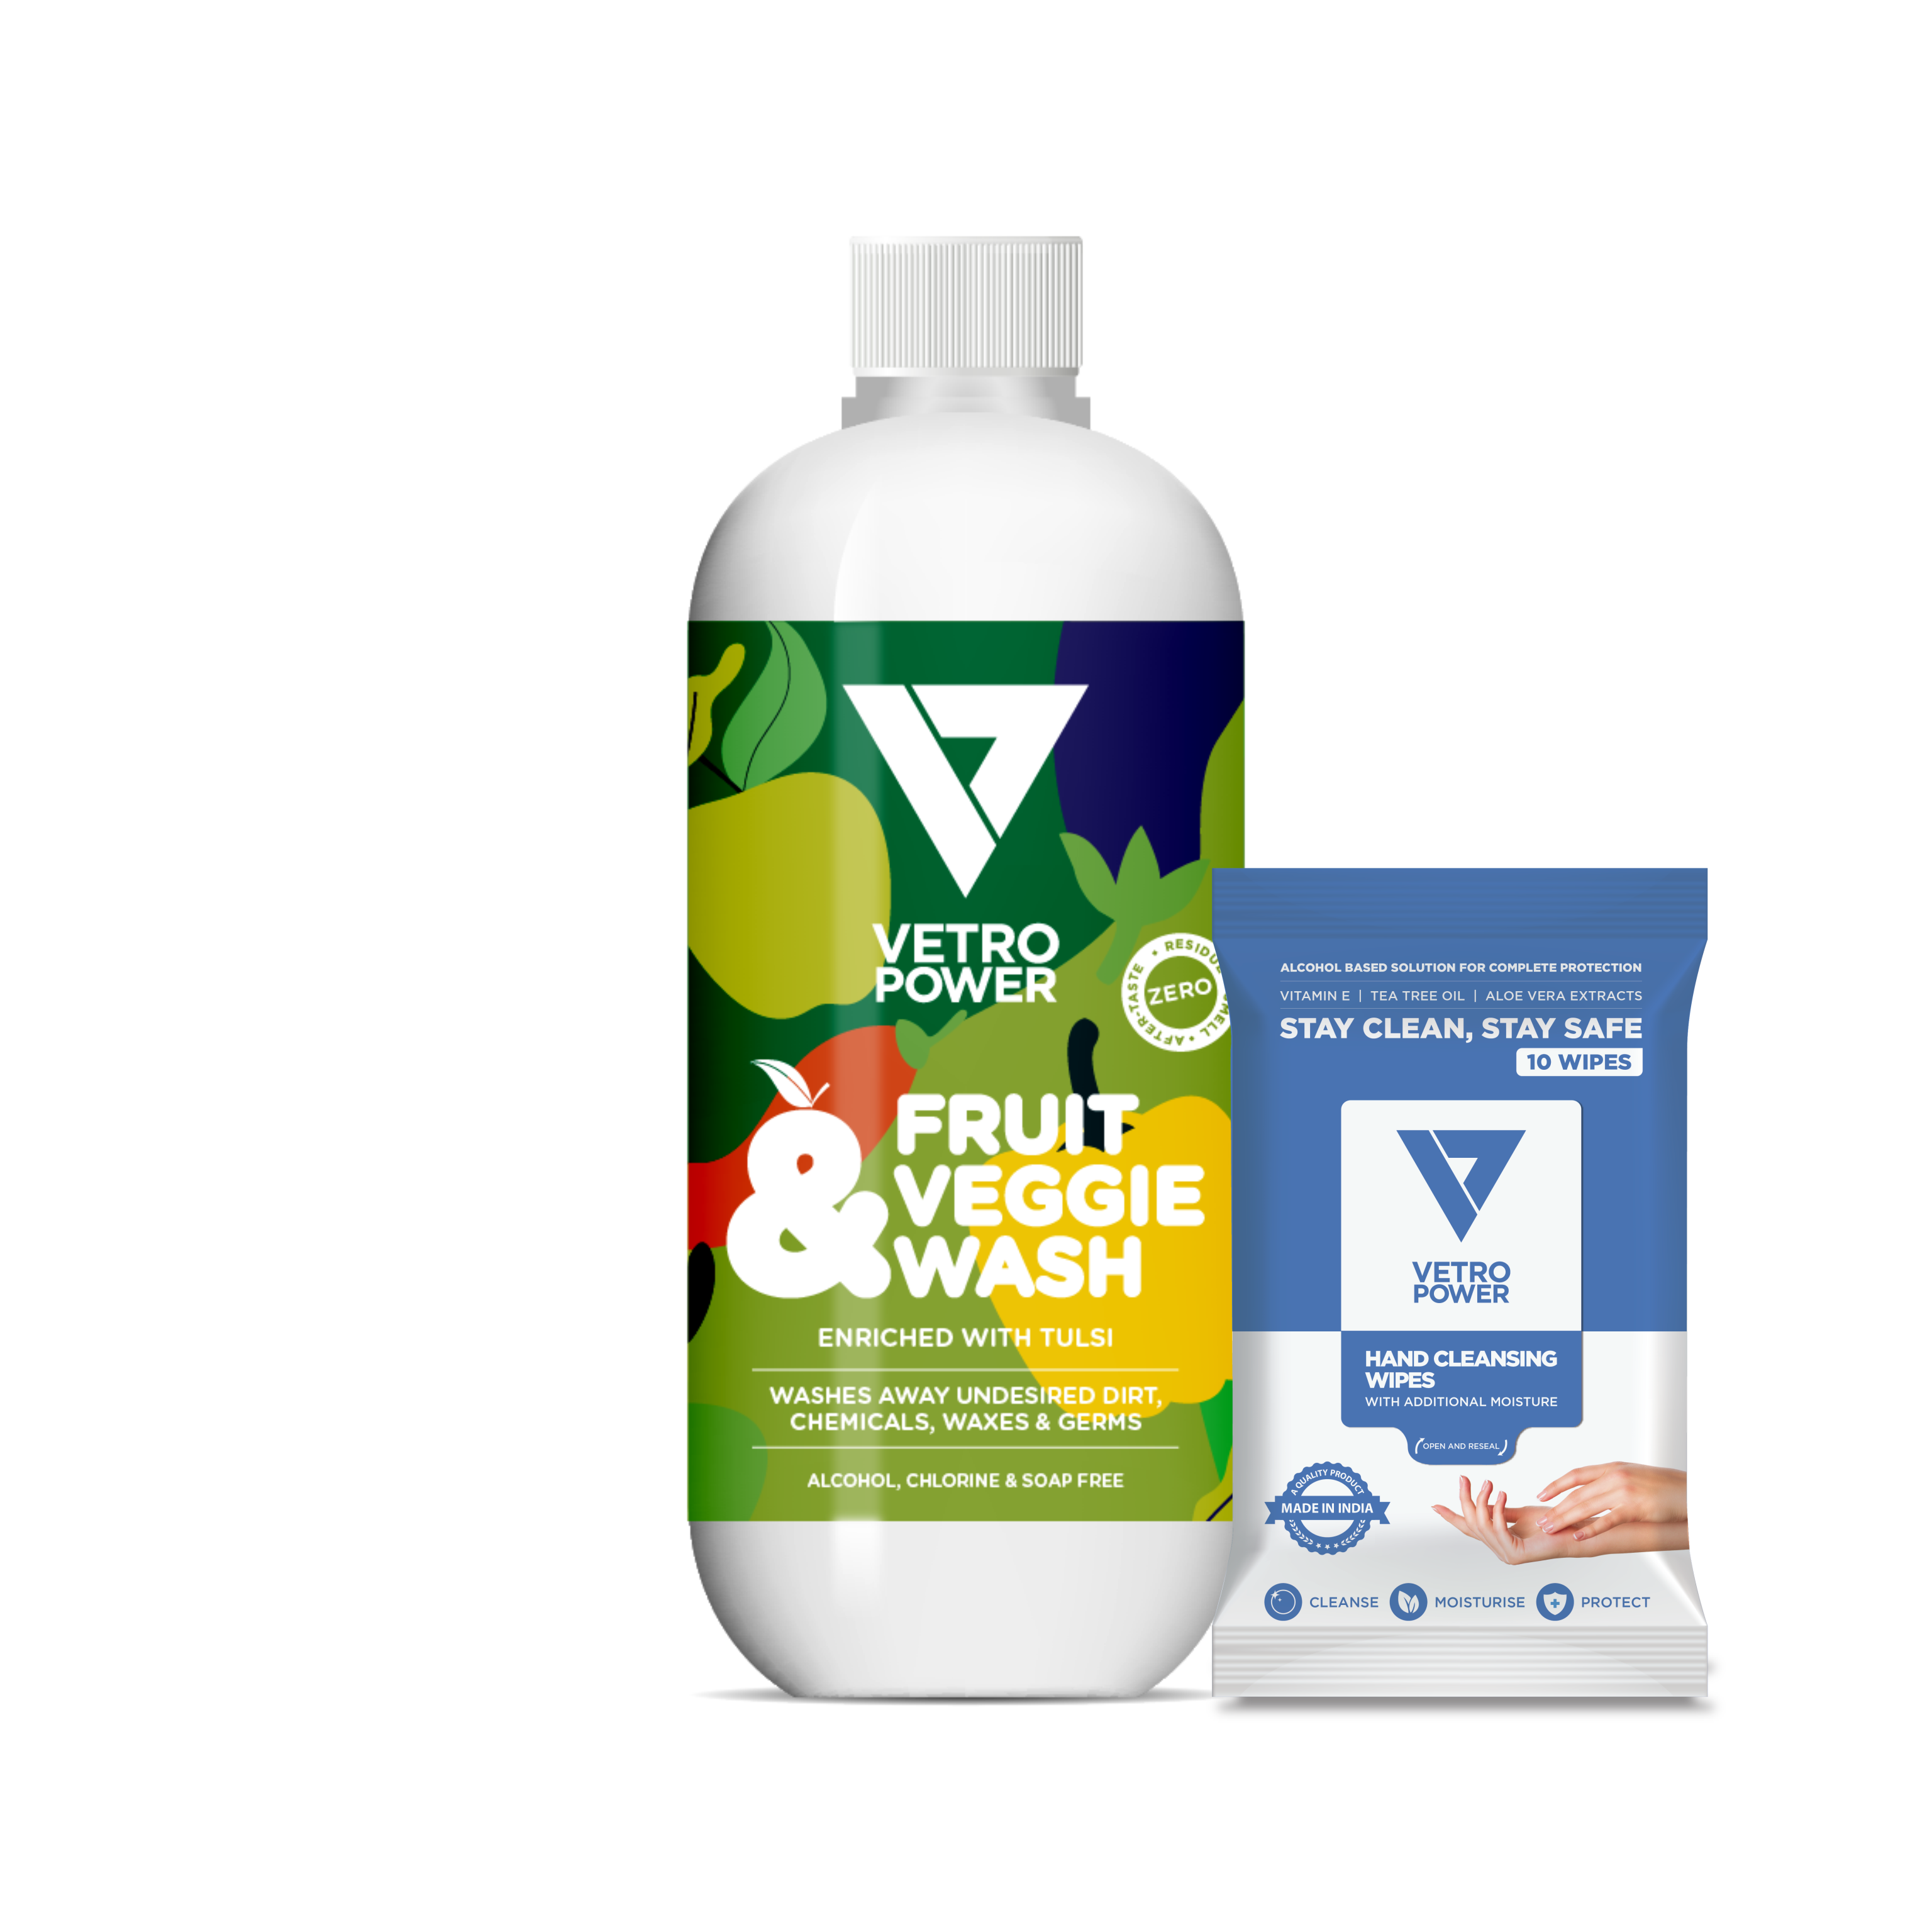 Vetro Power Fruit & Veggie Wash 500ml - Buy 1 Get 1 Hand Wipes (pack of 10) FREE